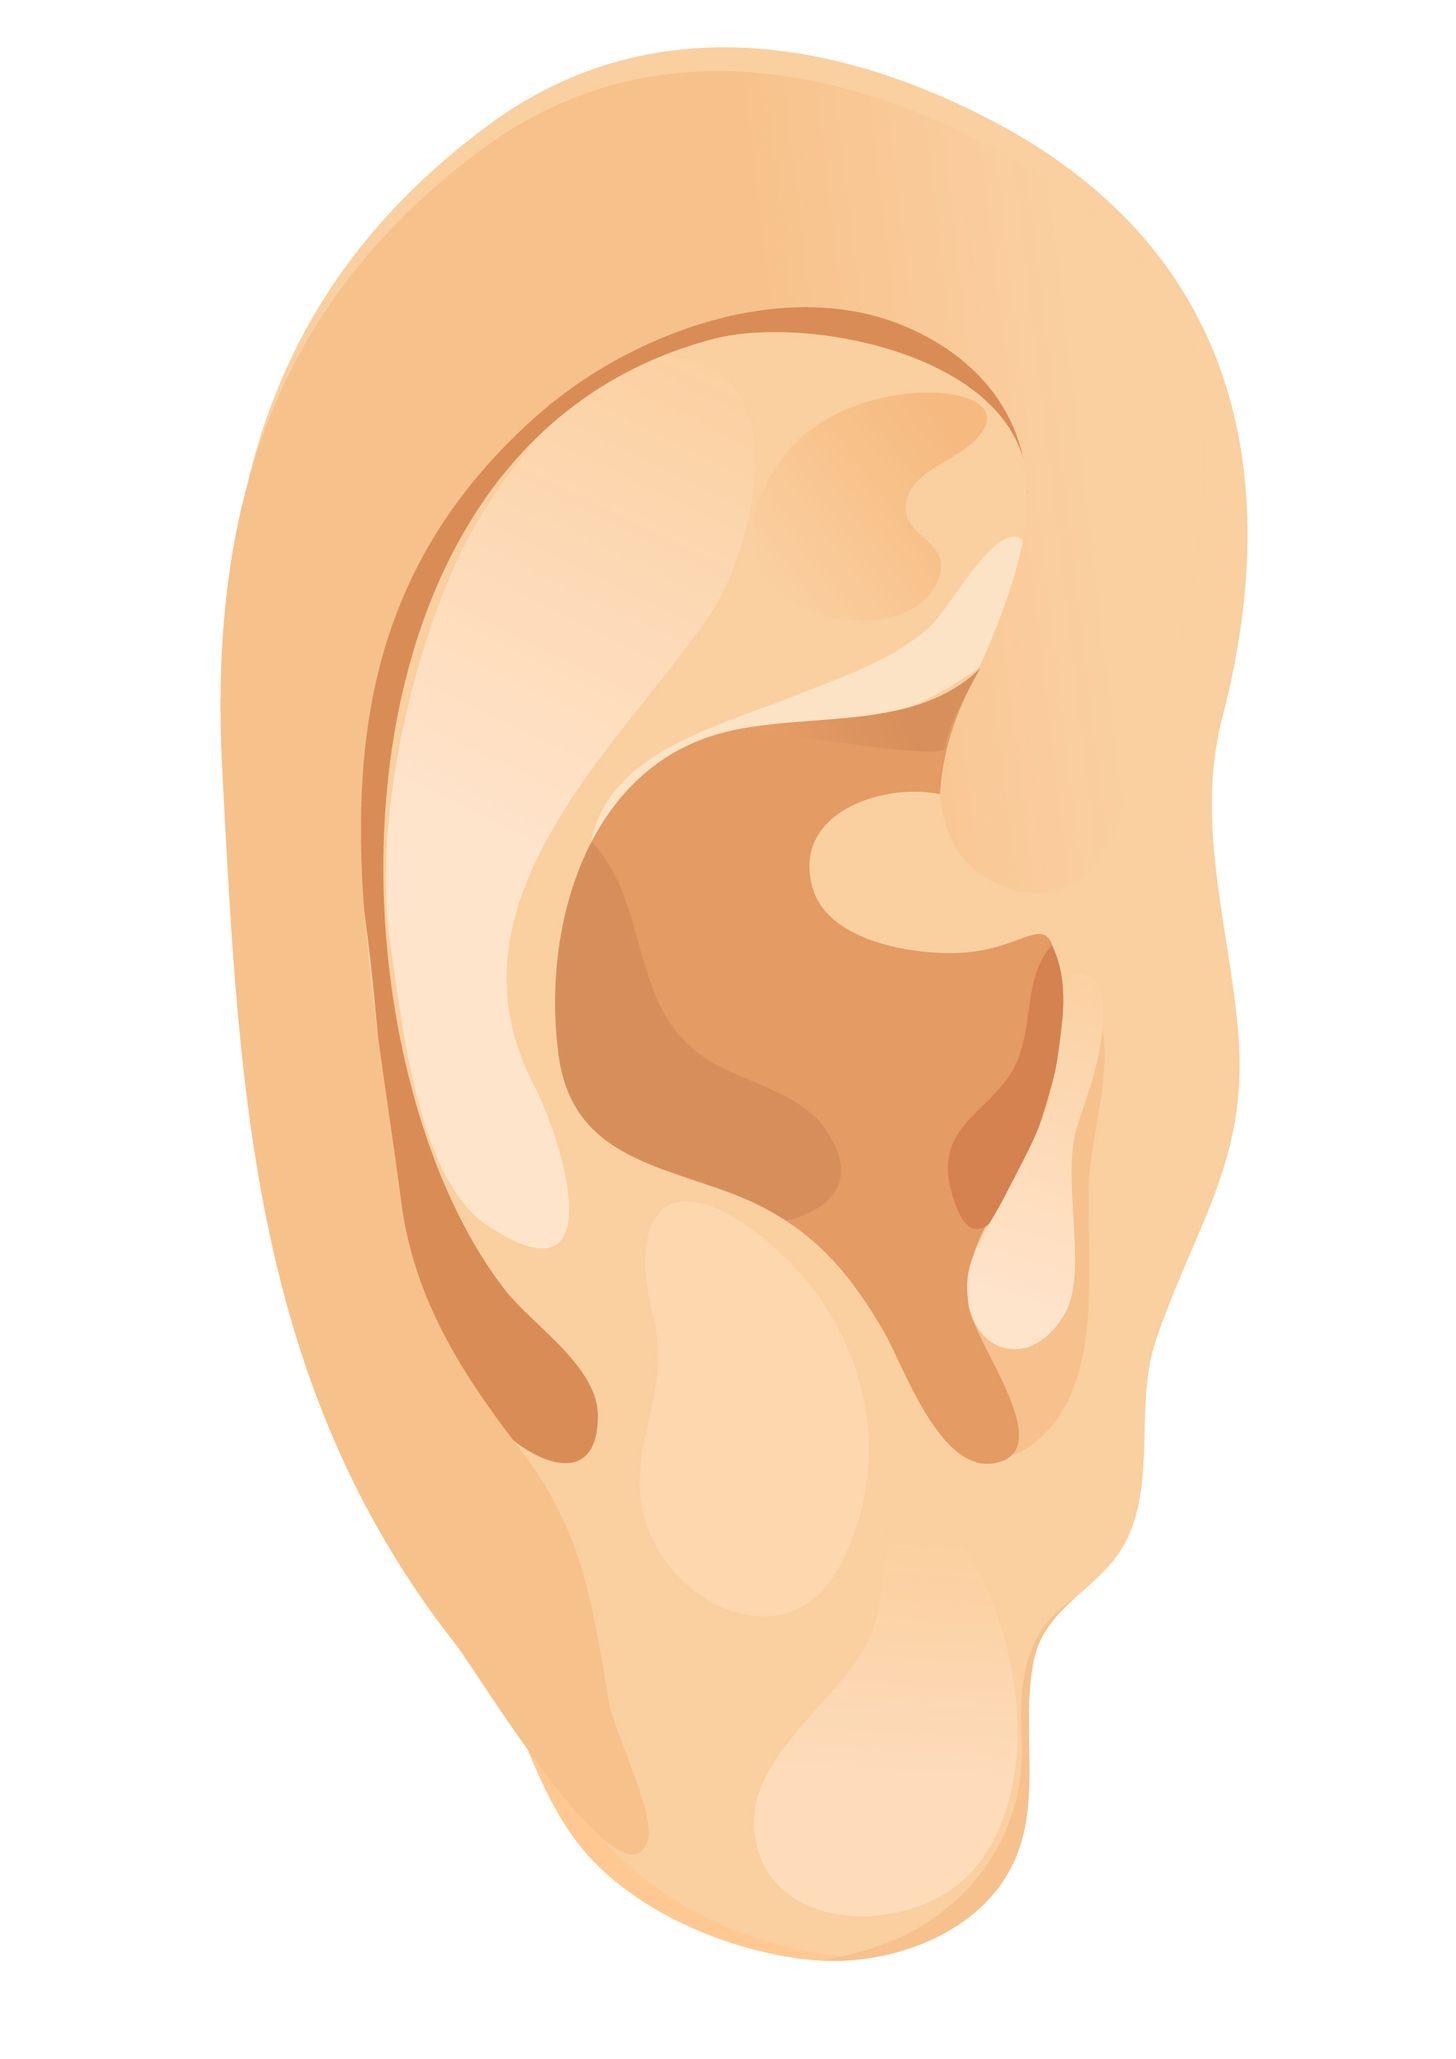 Ear Logo - Ida Institute Sponsors Logo Contest for International Ear Care Day ...